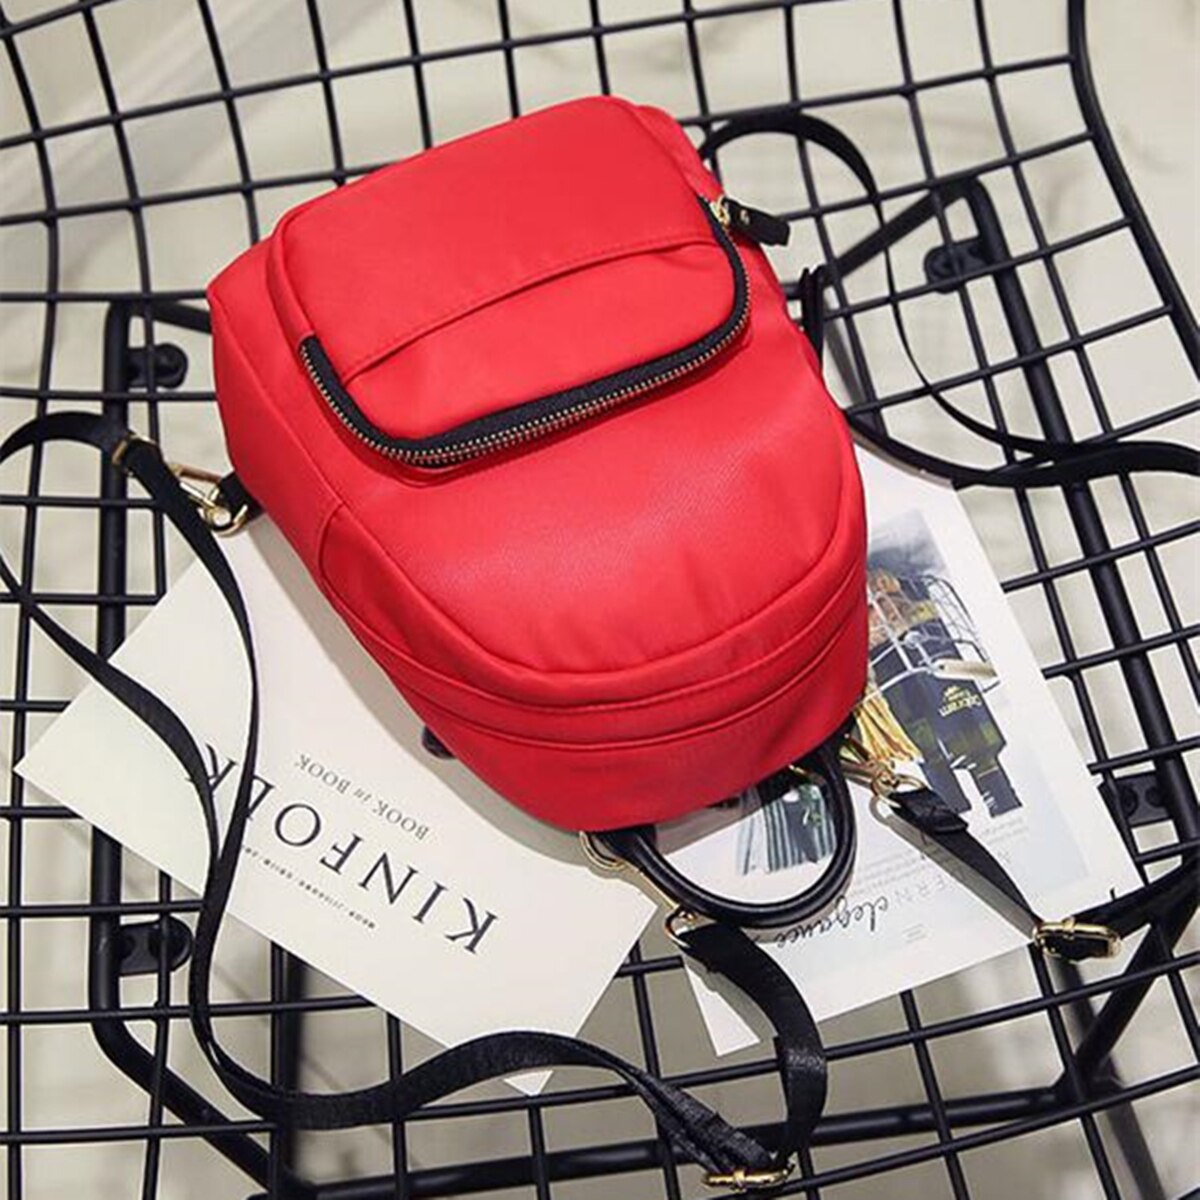 Women Backpack Nylon Shoulder School Travel Bag Small Casual Rucksack(Red) - ebowsos